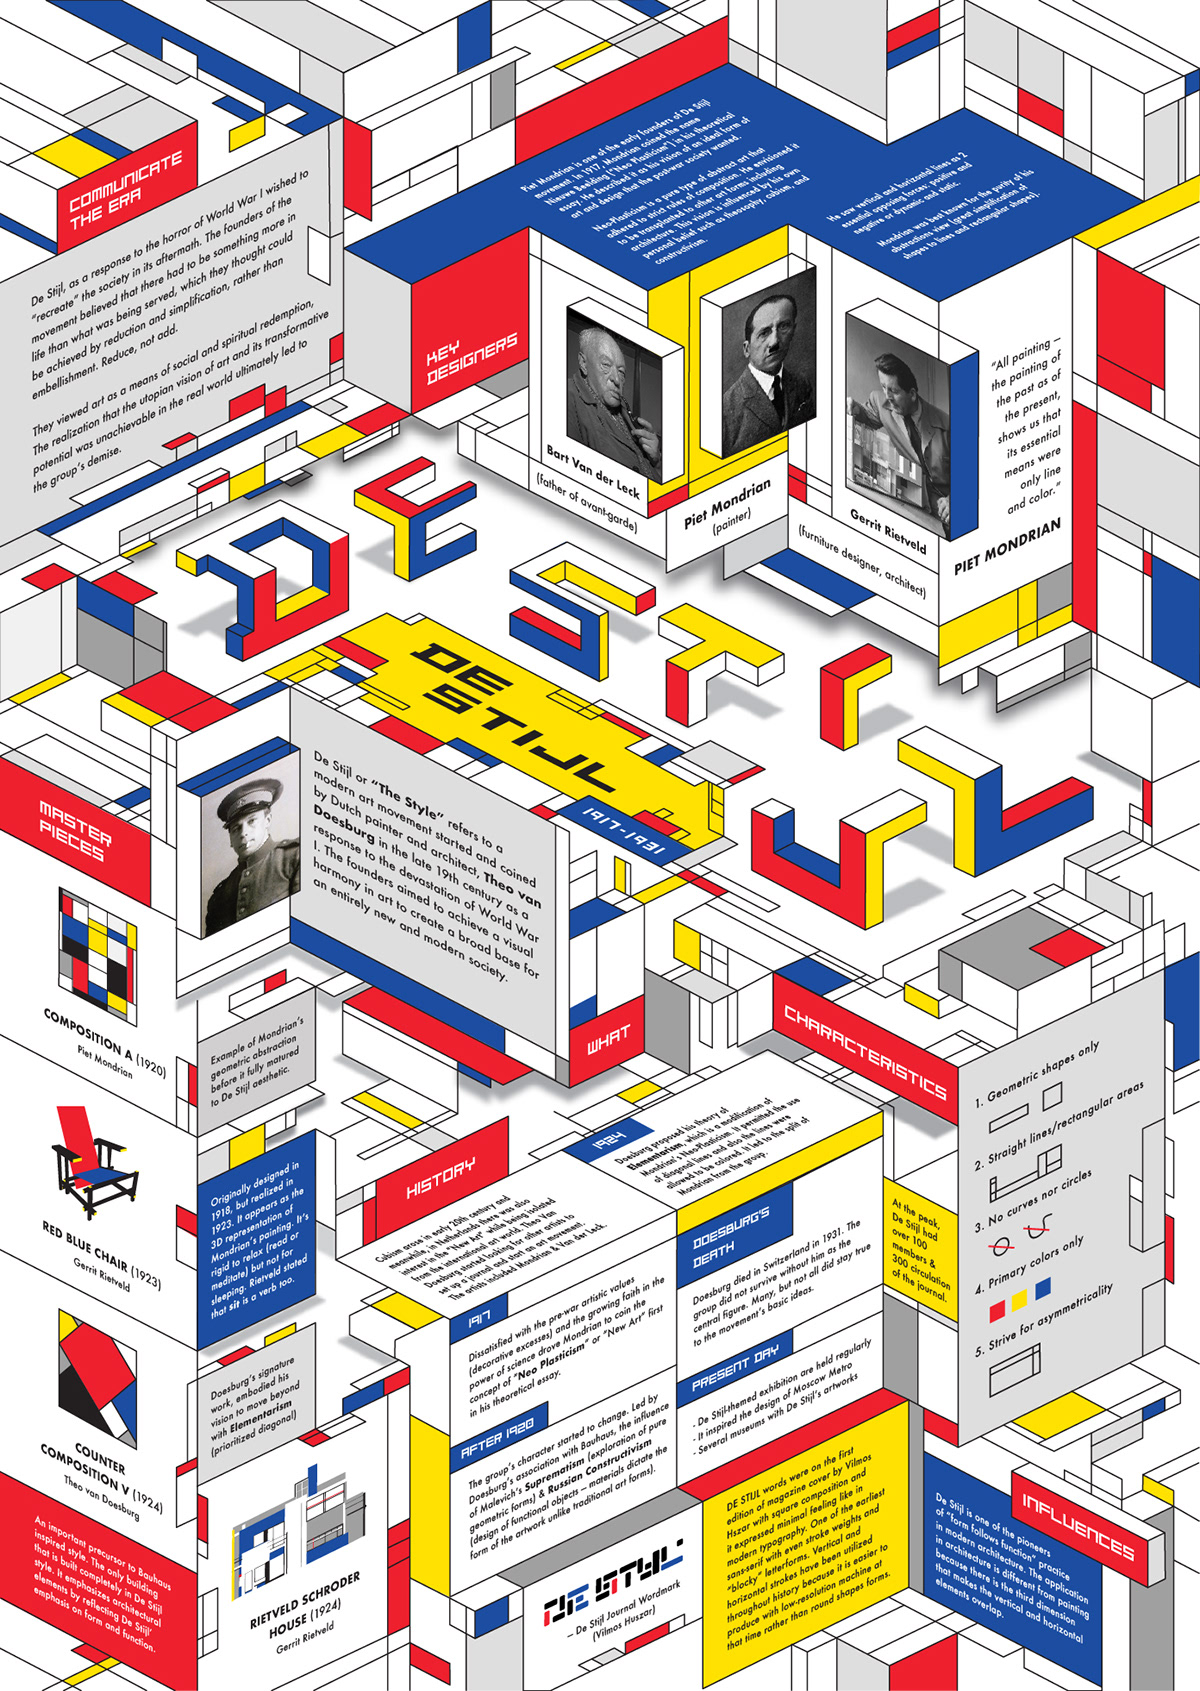 de stijl infographic poster design Layout Primary colors blue red yellow piet mondrian